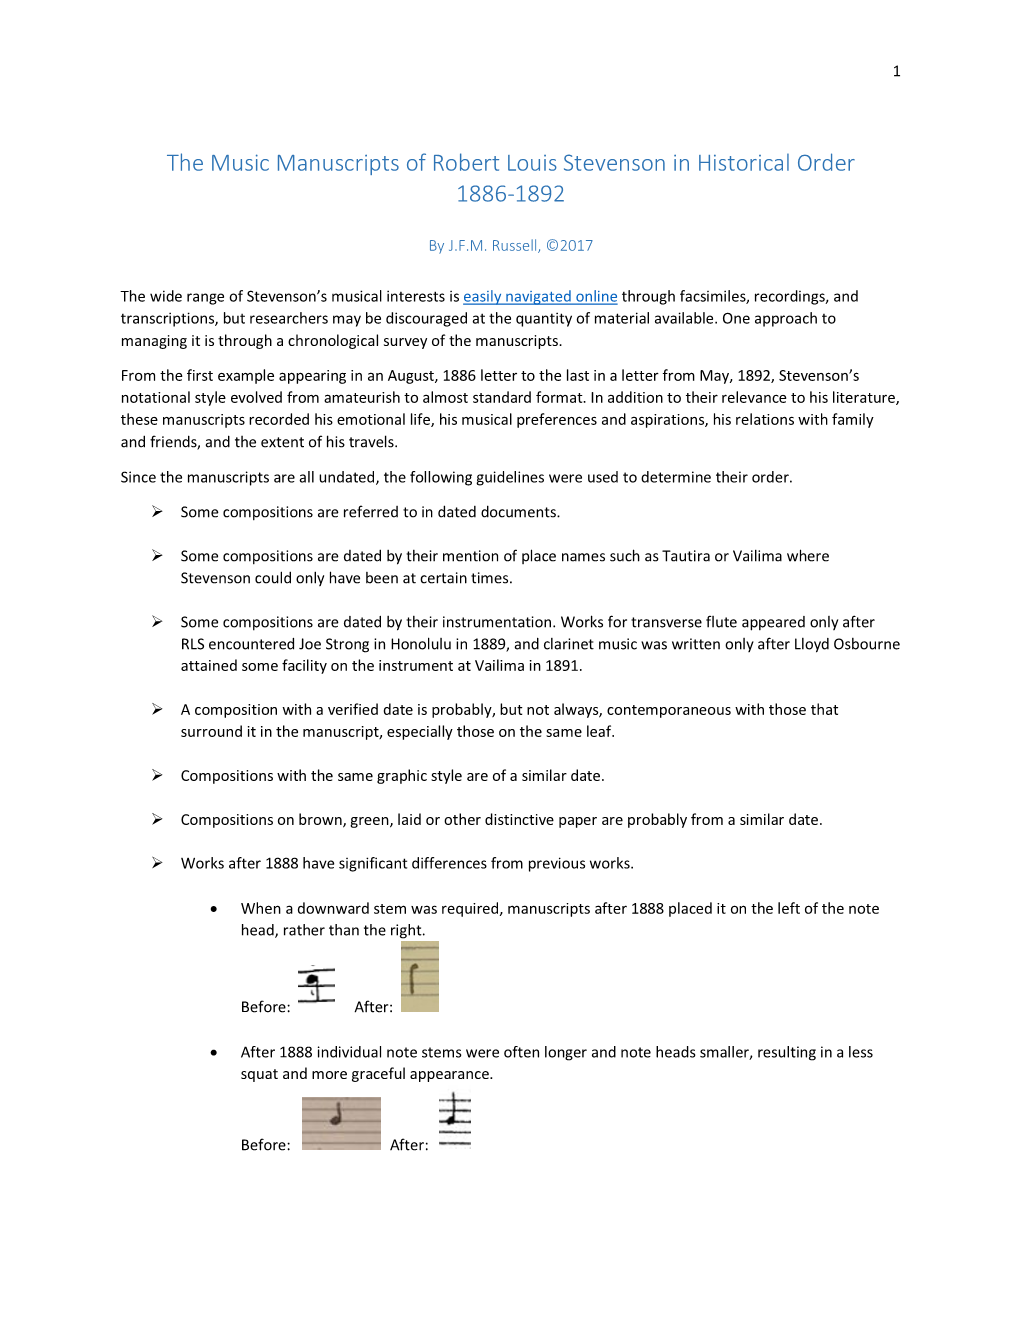 The Music Manuscripts of Robert Louis Stevenson in Historical Order 1886-1892